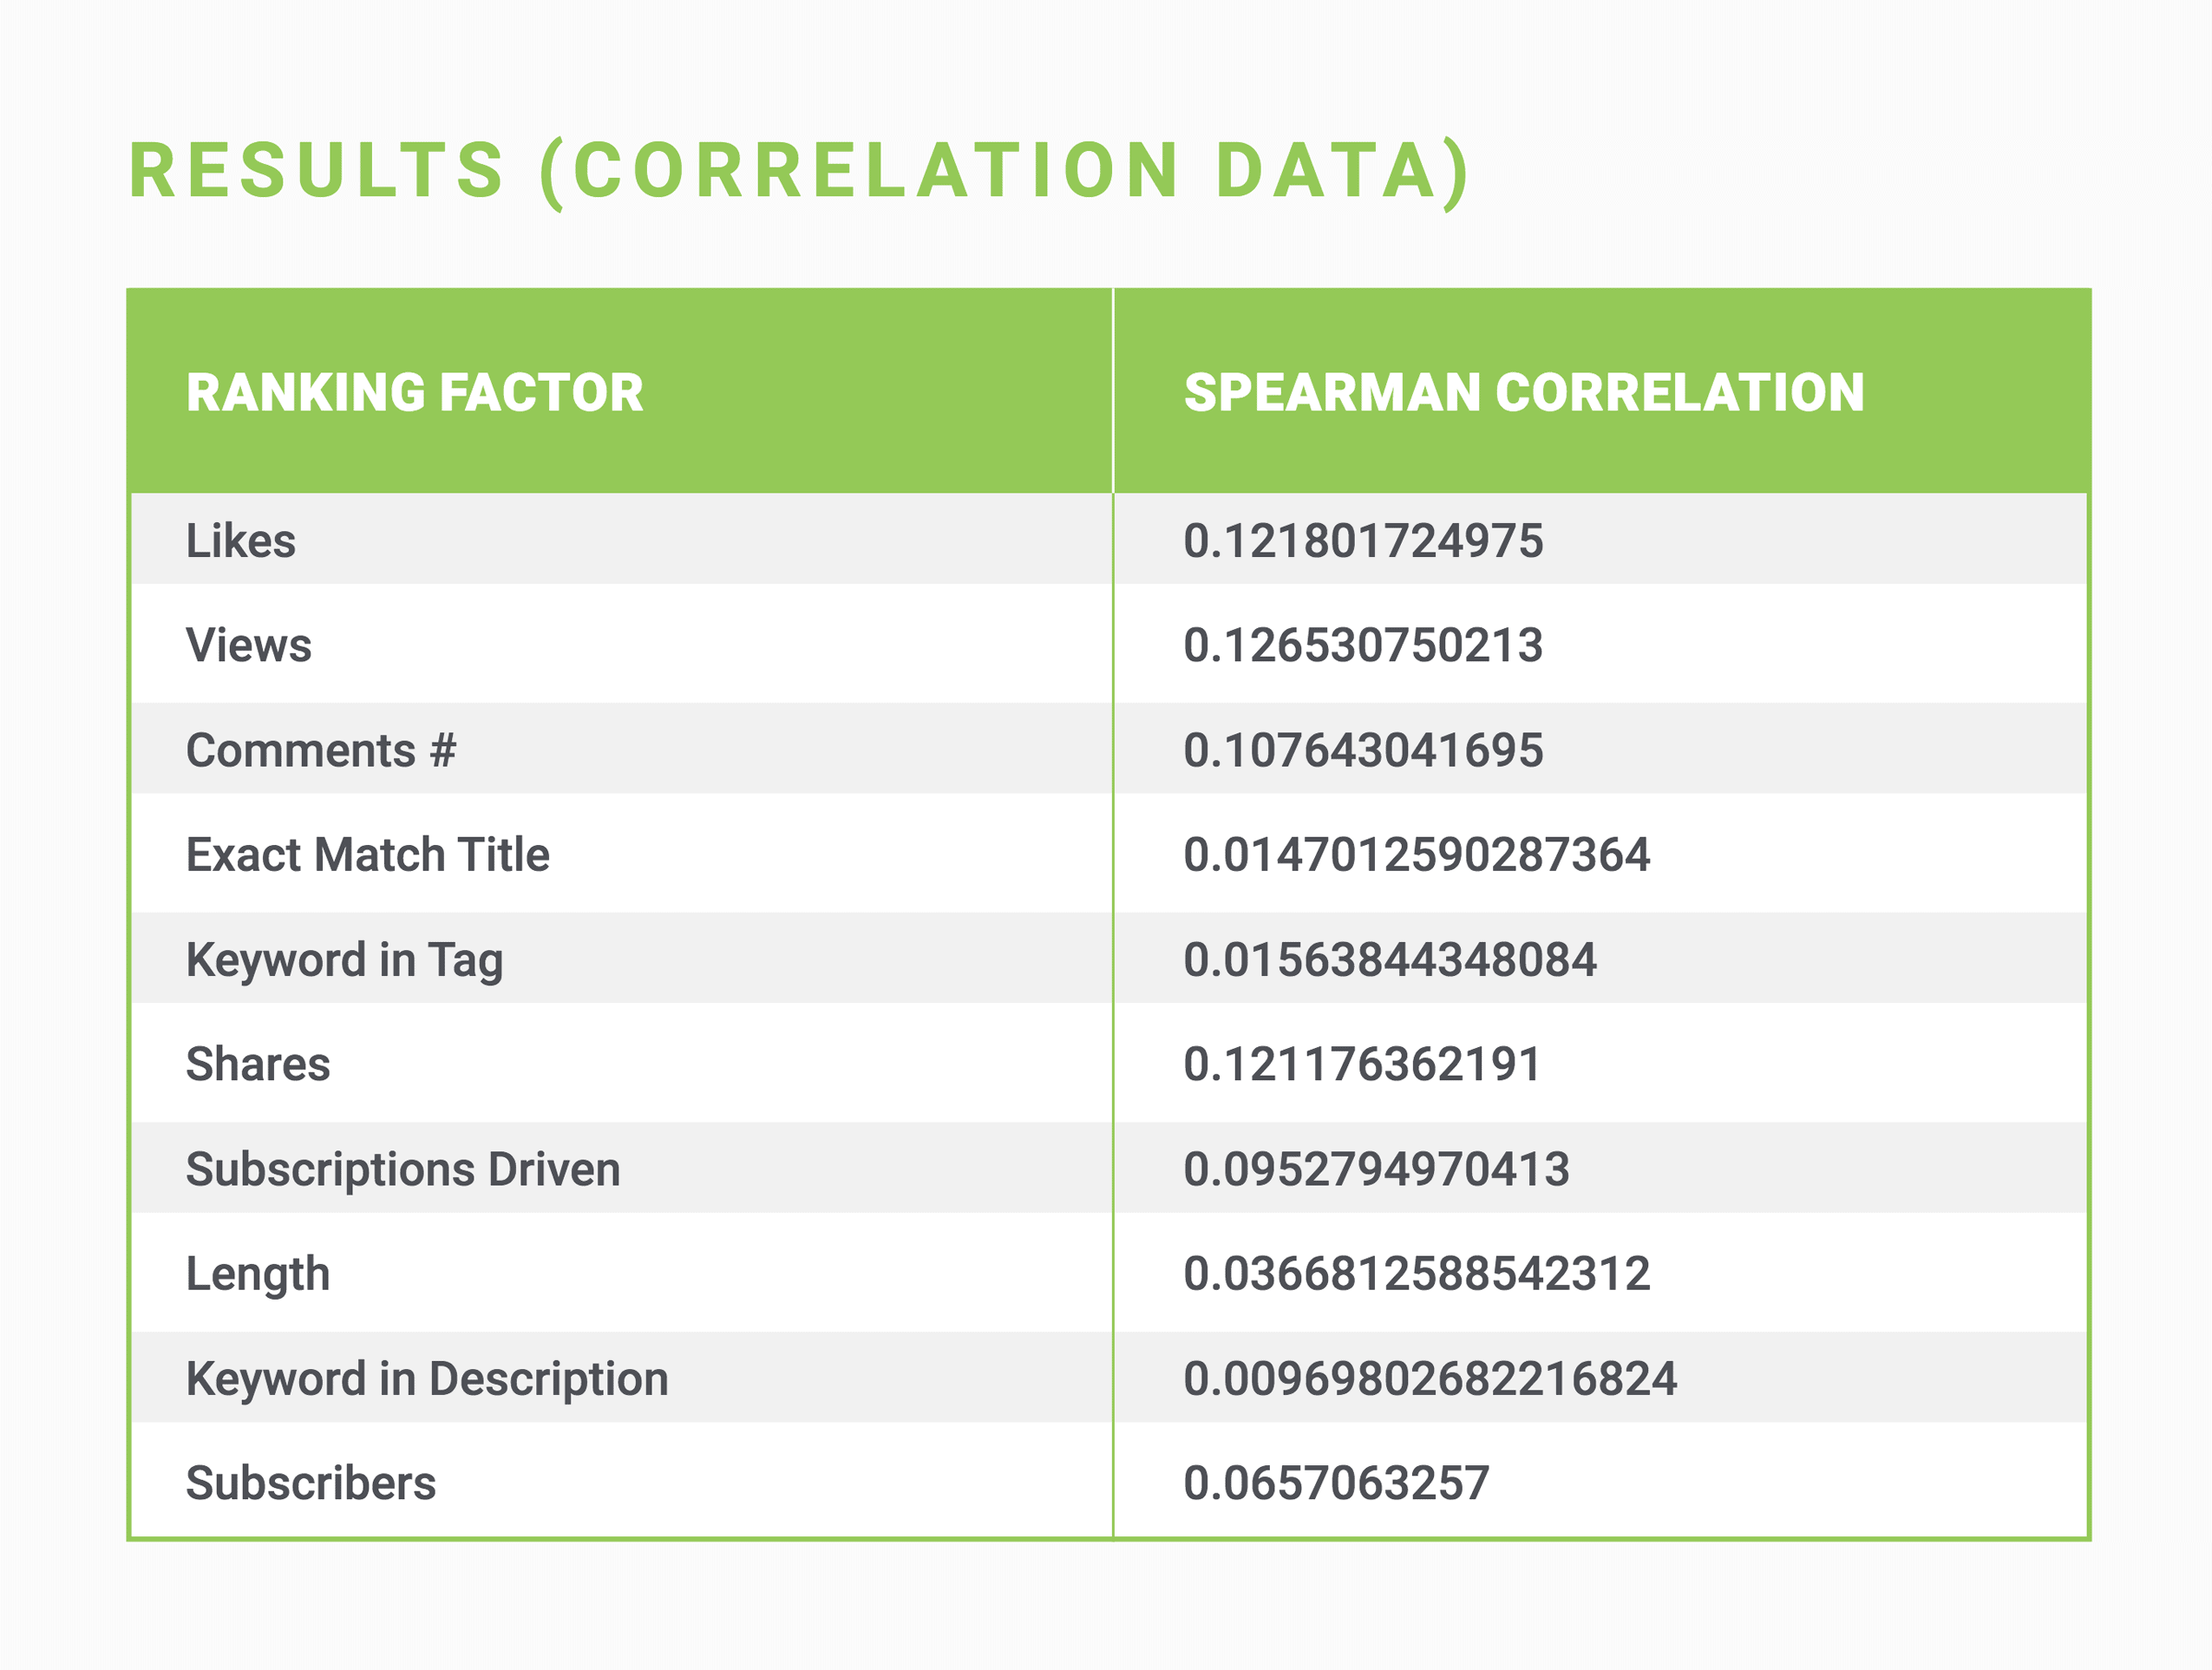 Correlation data